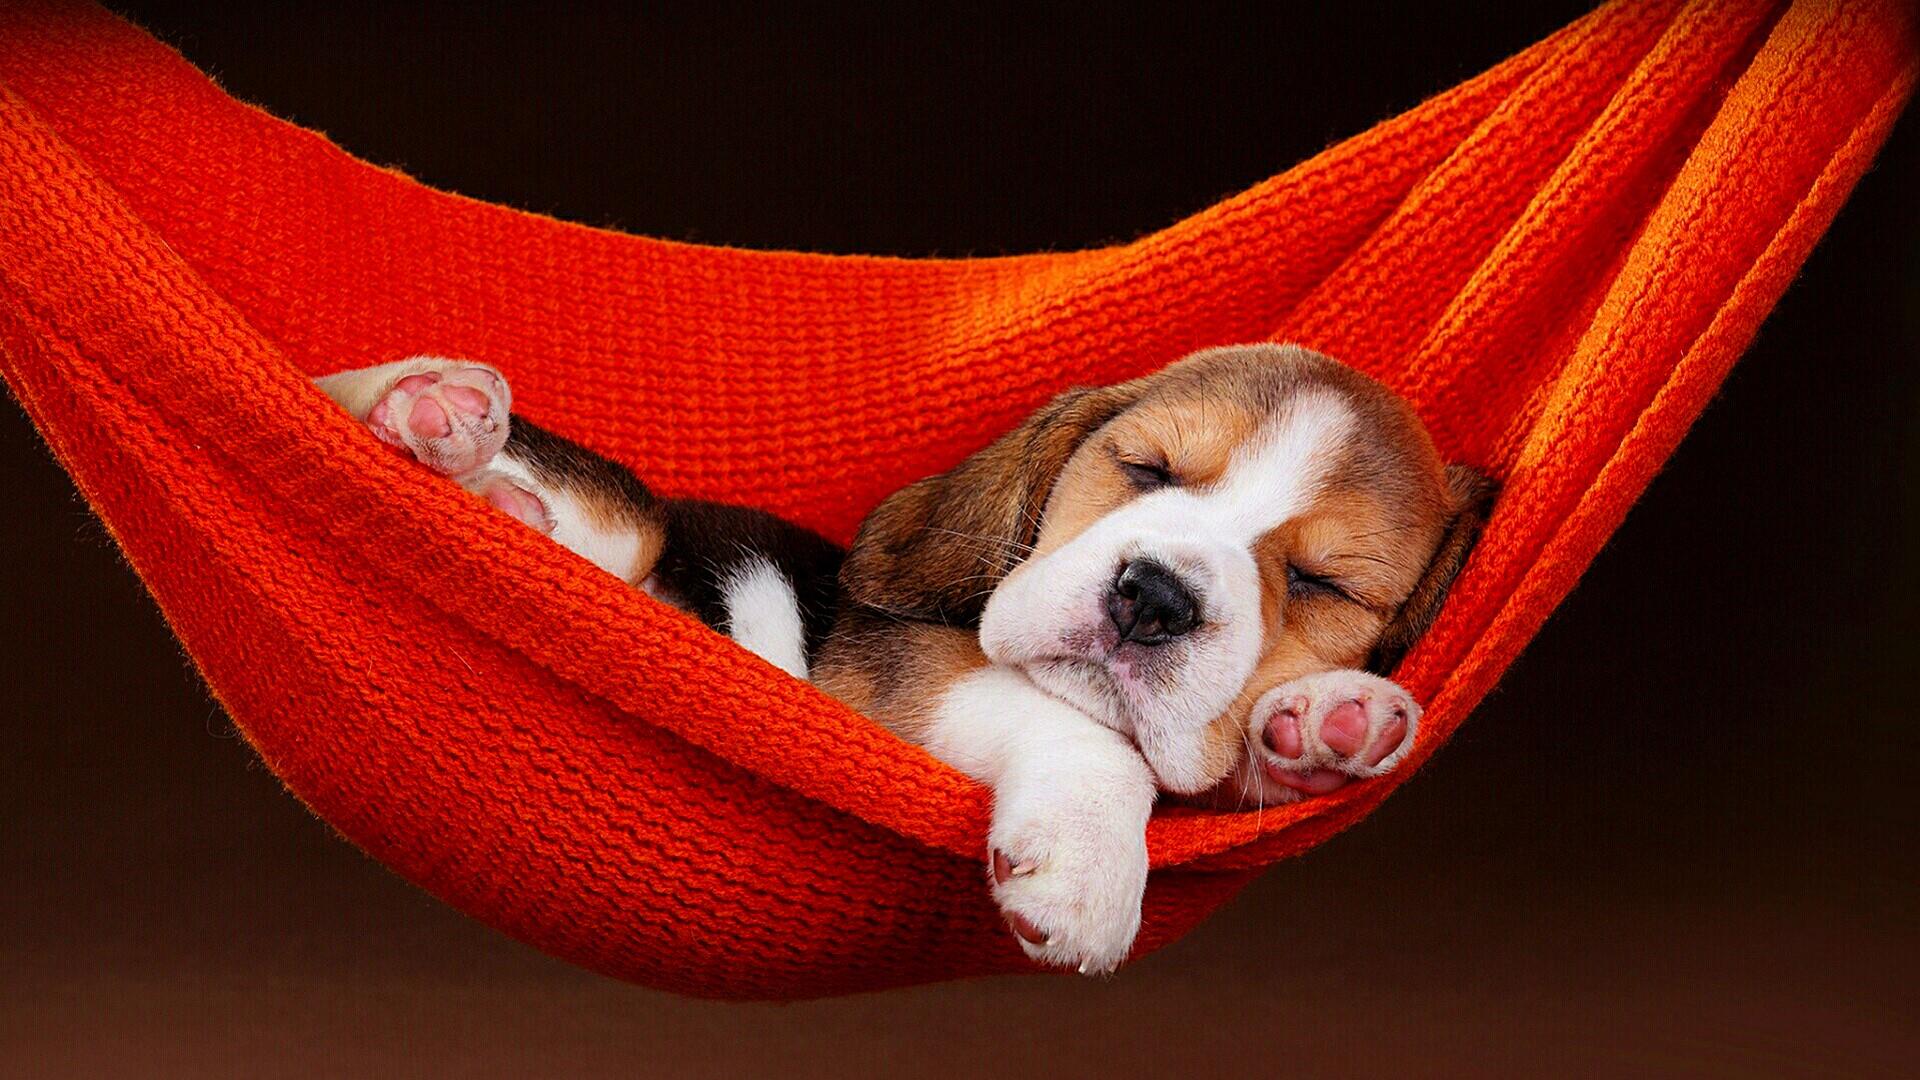 HD wallpaper animal, beagle, dog, hammock, puppy, sleeping, dogs